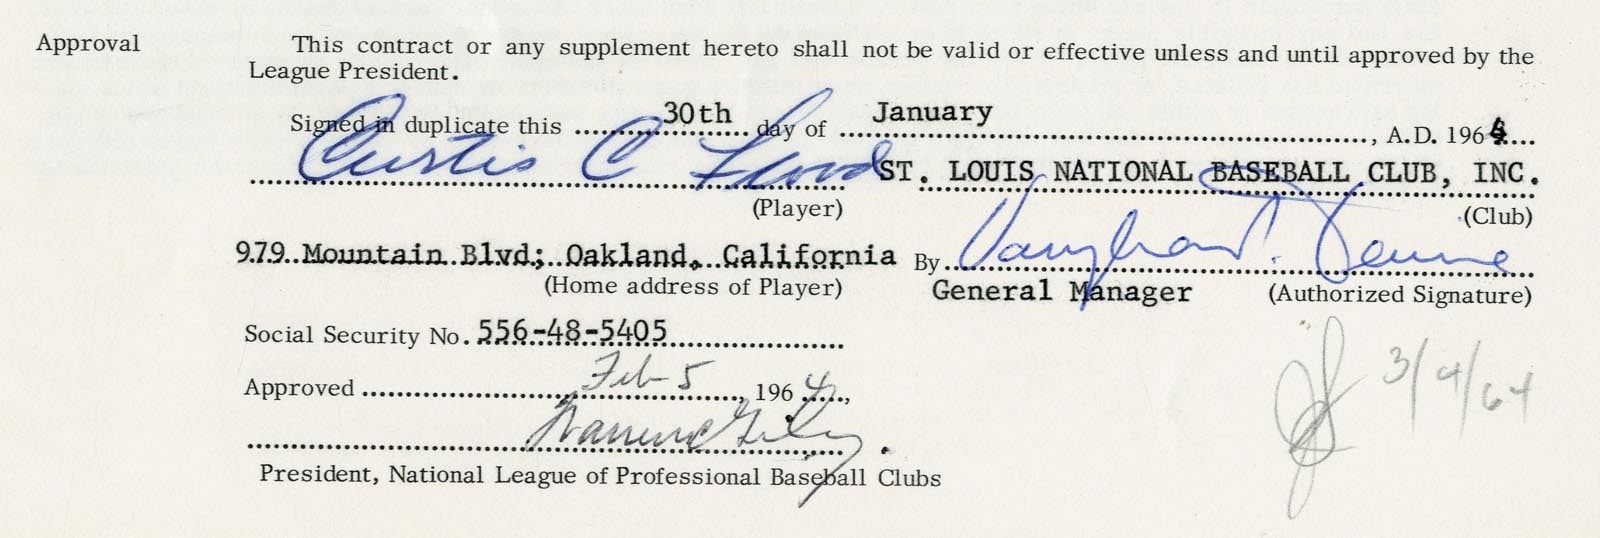 1964 Curt Flood Signed Cardinals Uniform Player's Contract - Championship Season